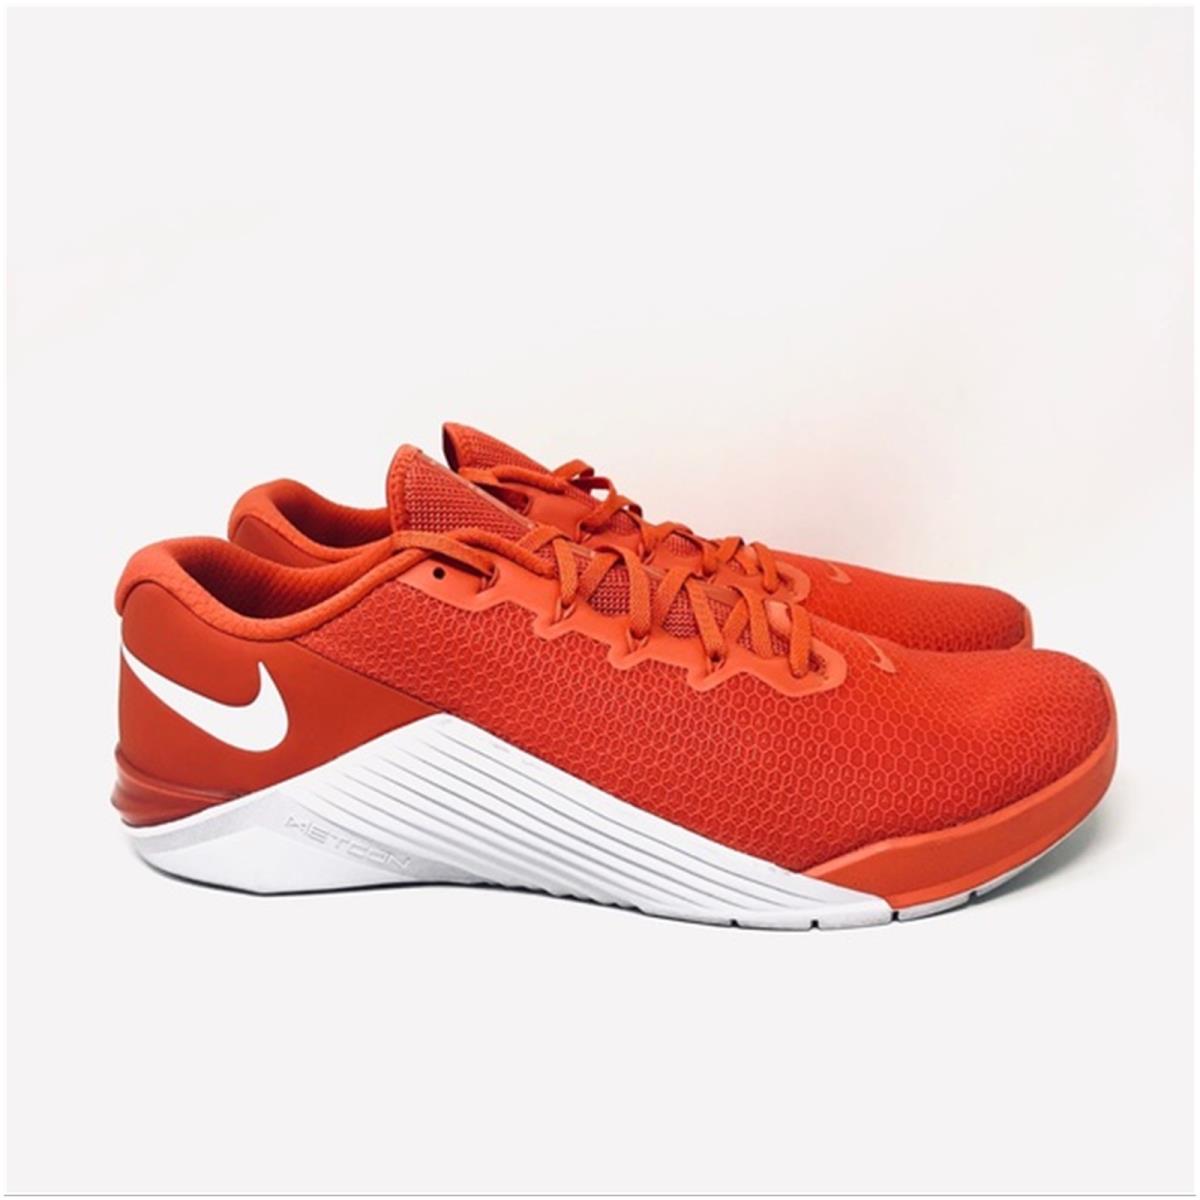 Nike Metcon 5 <AQ1189 - 891>.UNISEX Adults Athletic Shoes with Box - TEAM ORANGE / WHITE-BLACK